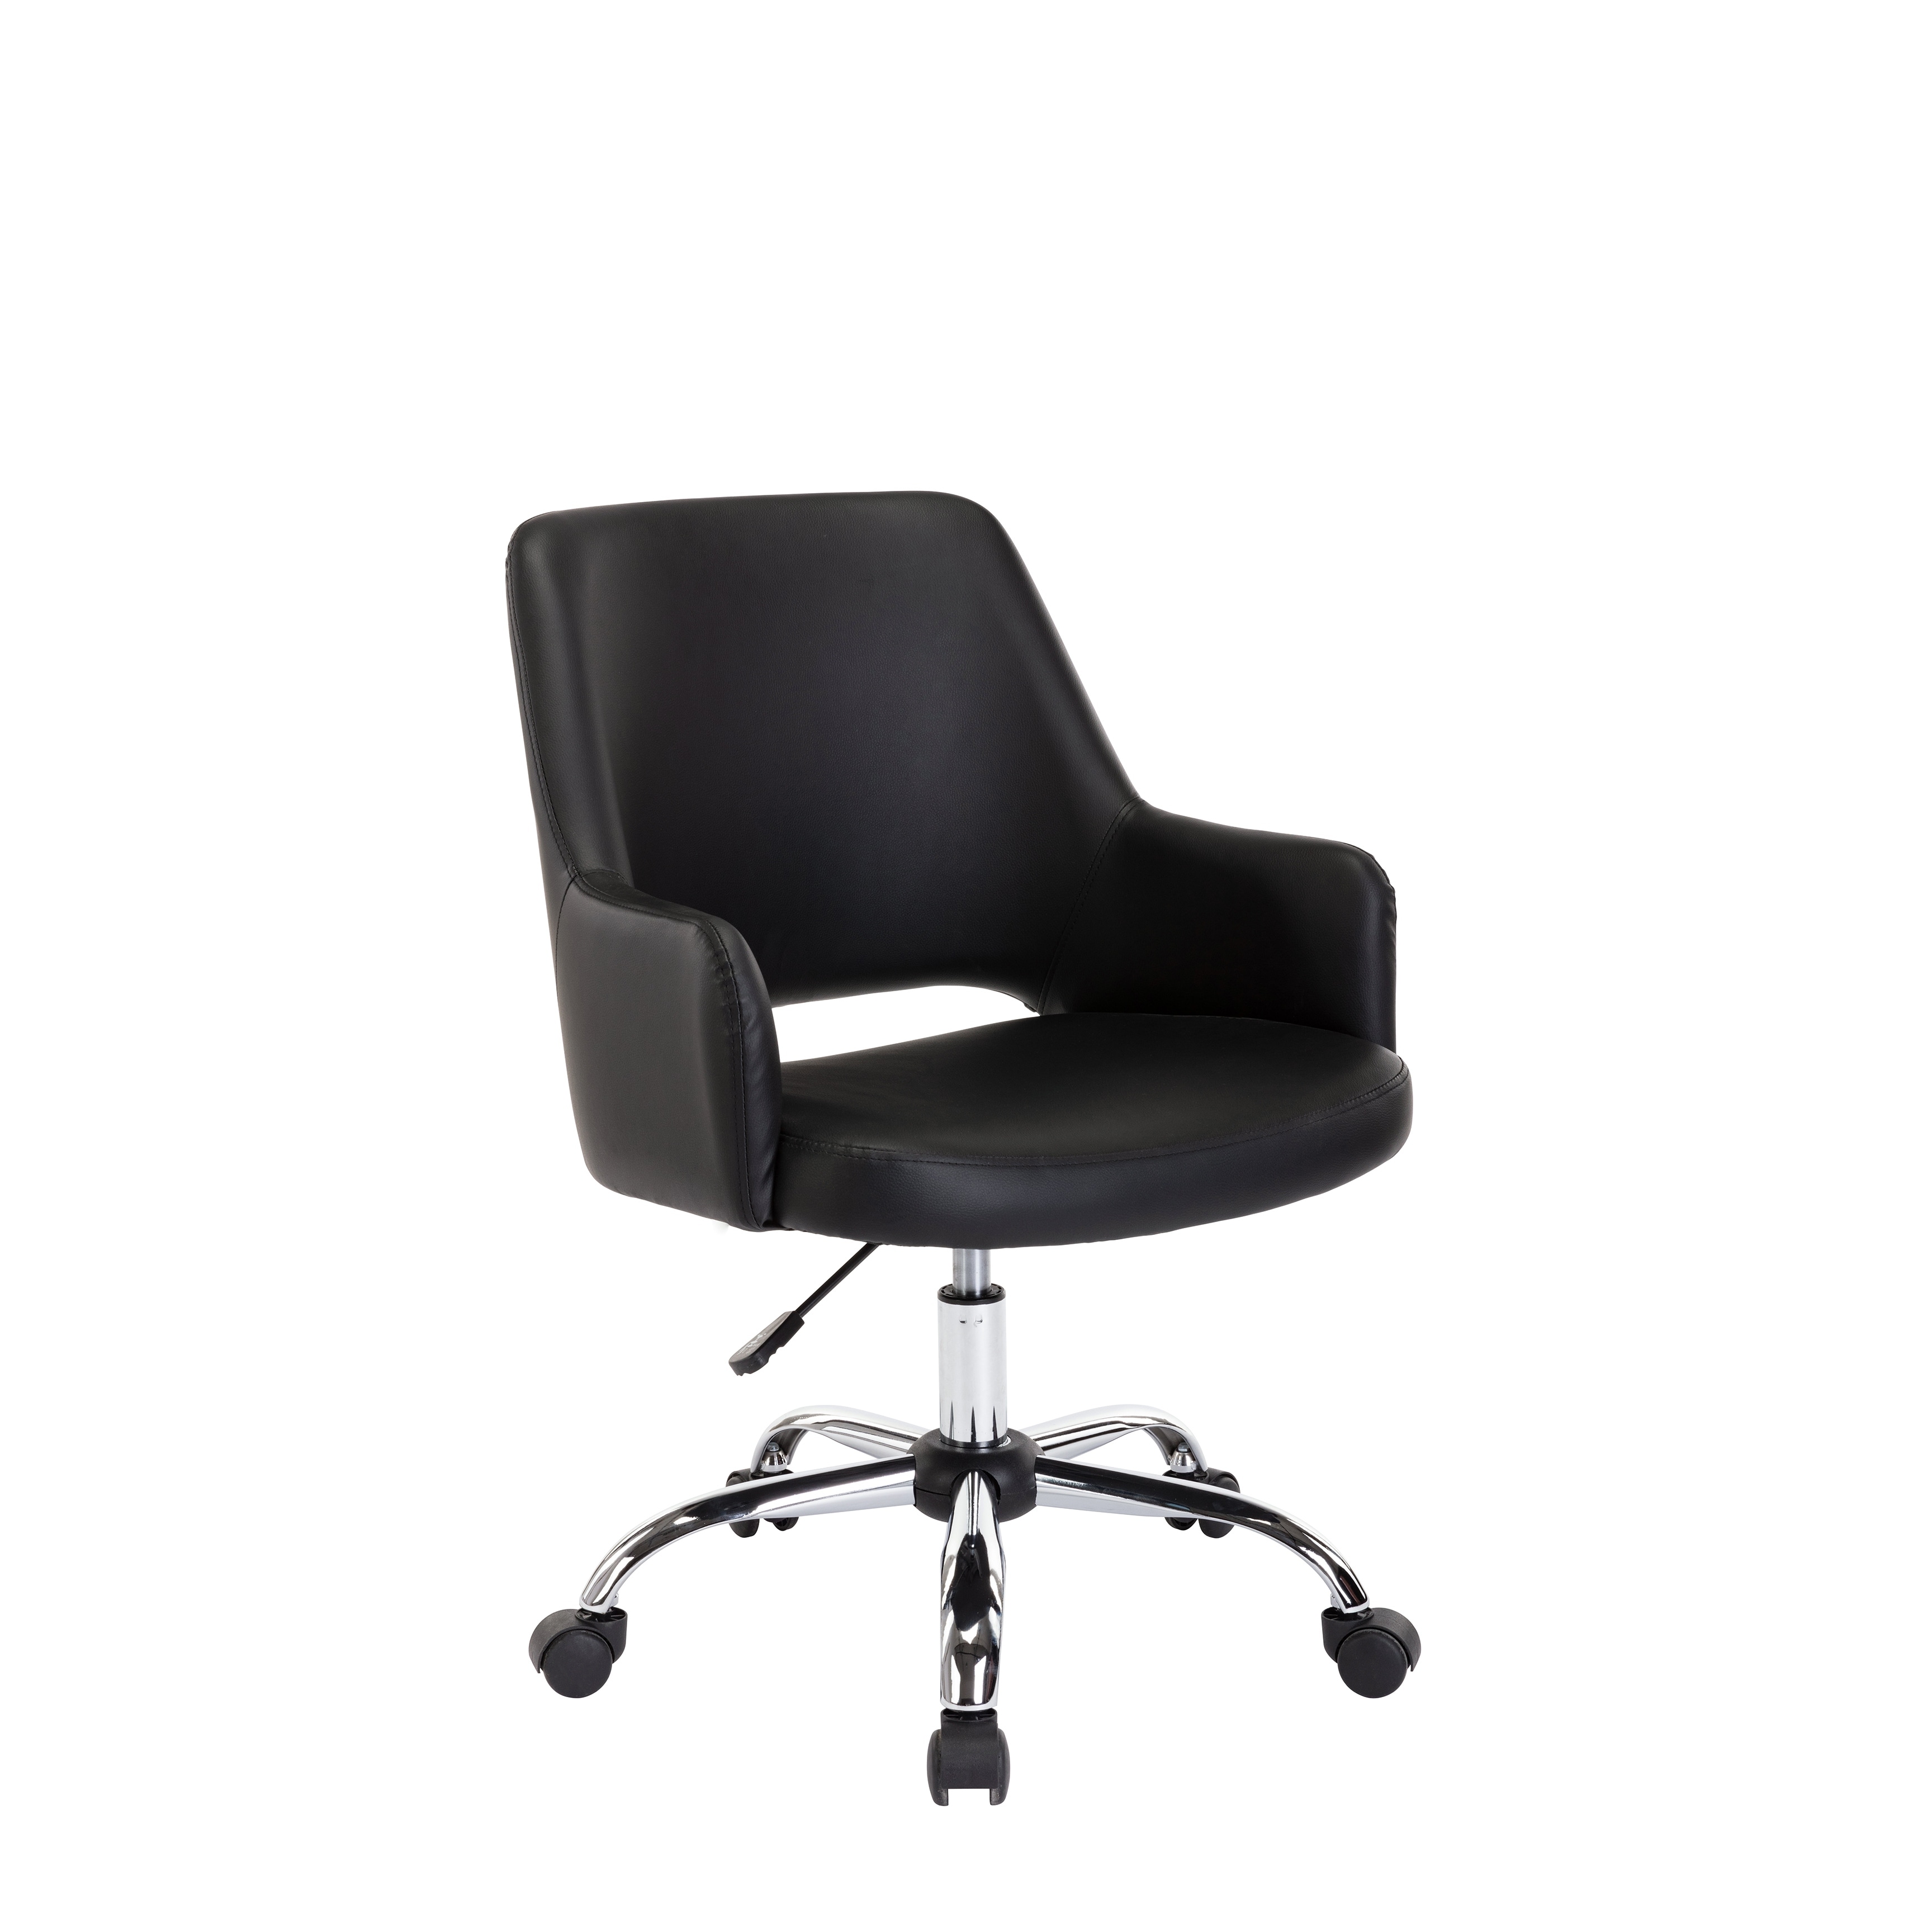 Porthos Home Maesi 360-deg Swivel Office Chair, PU Leather Upholstery